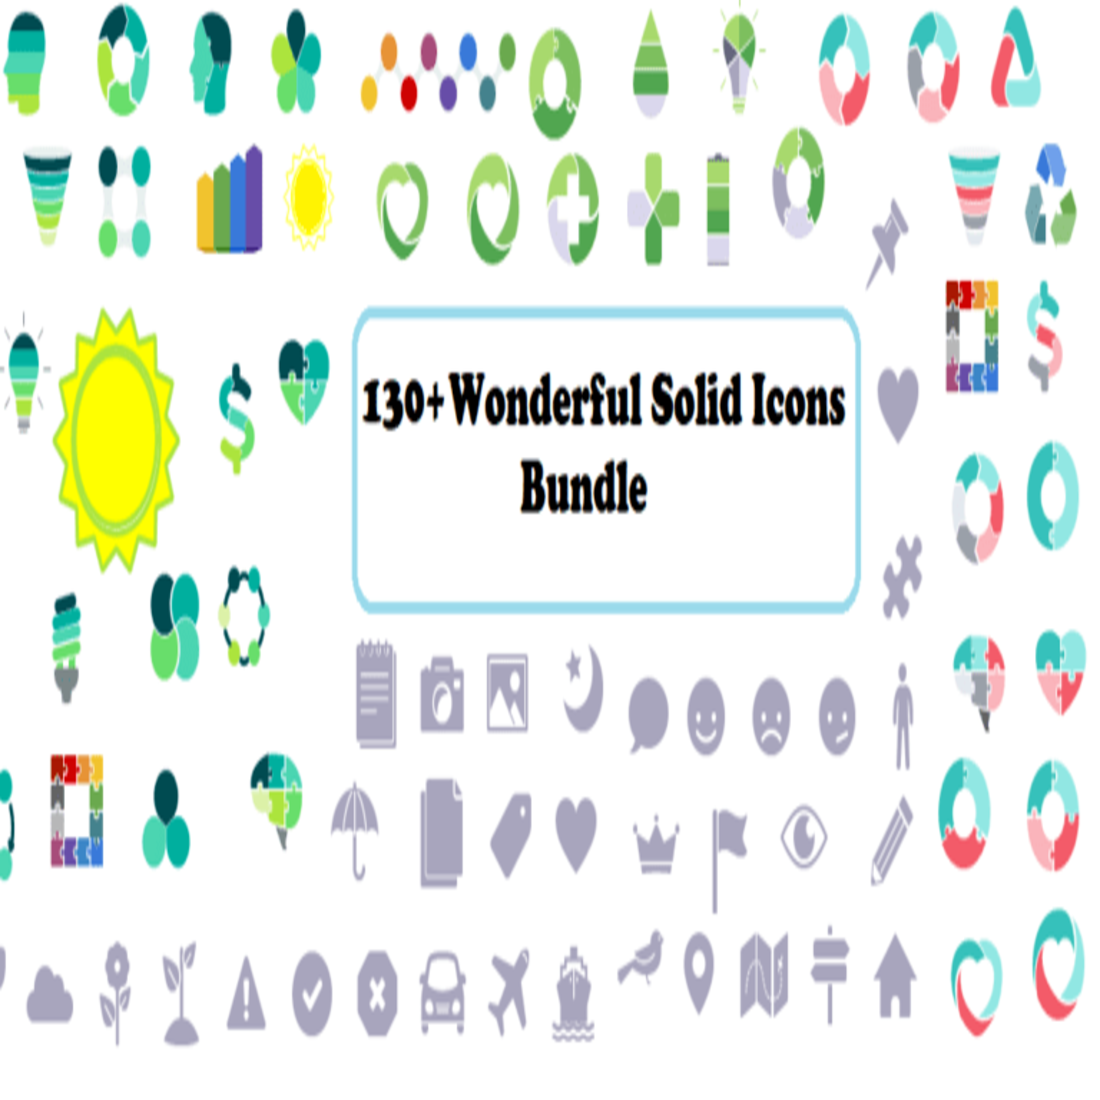 Wonderful Solid Icons Bundle cover image.